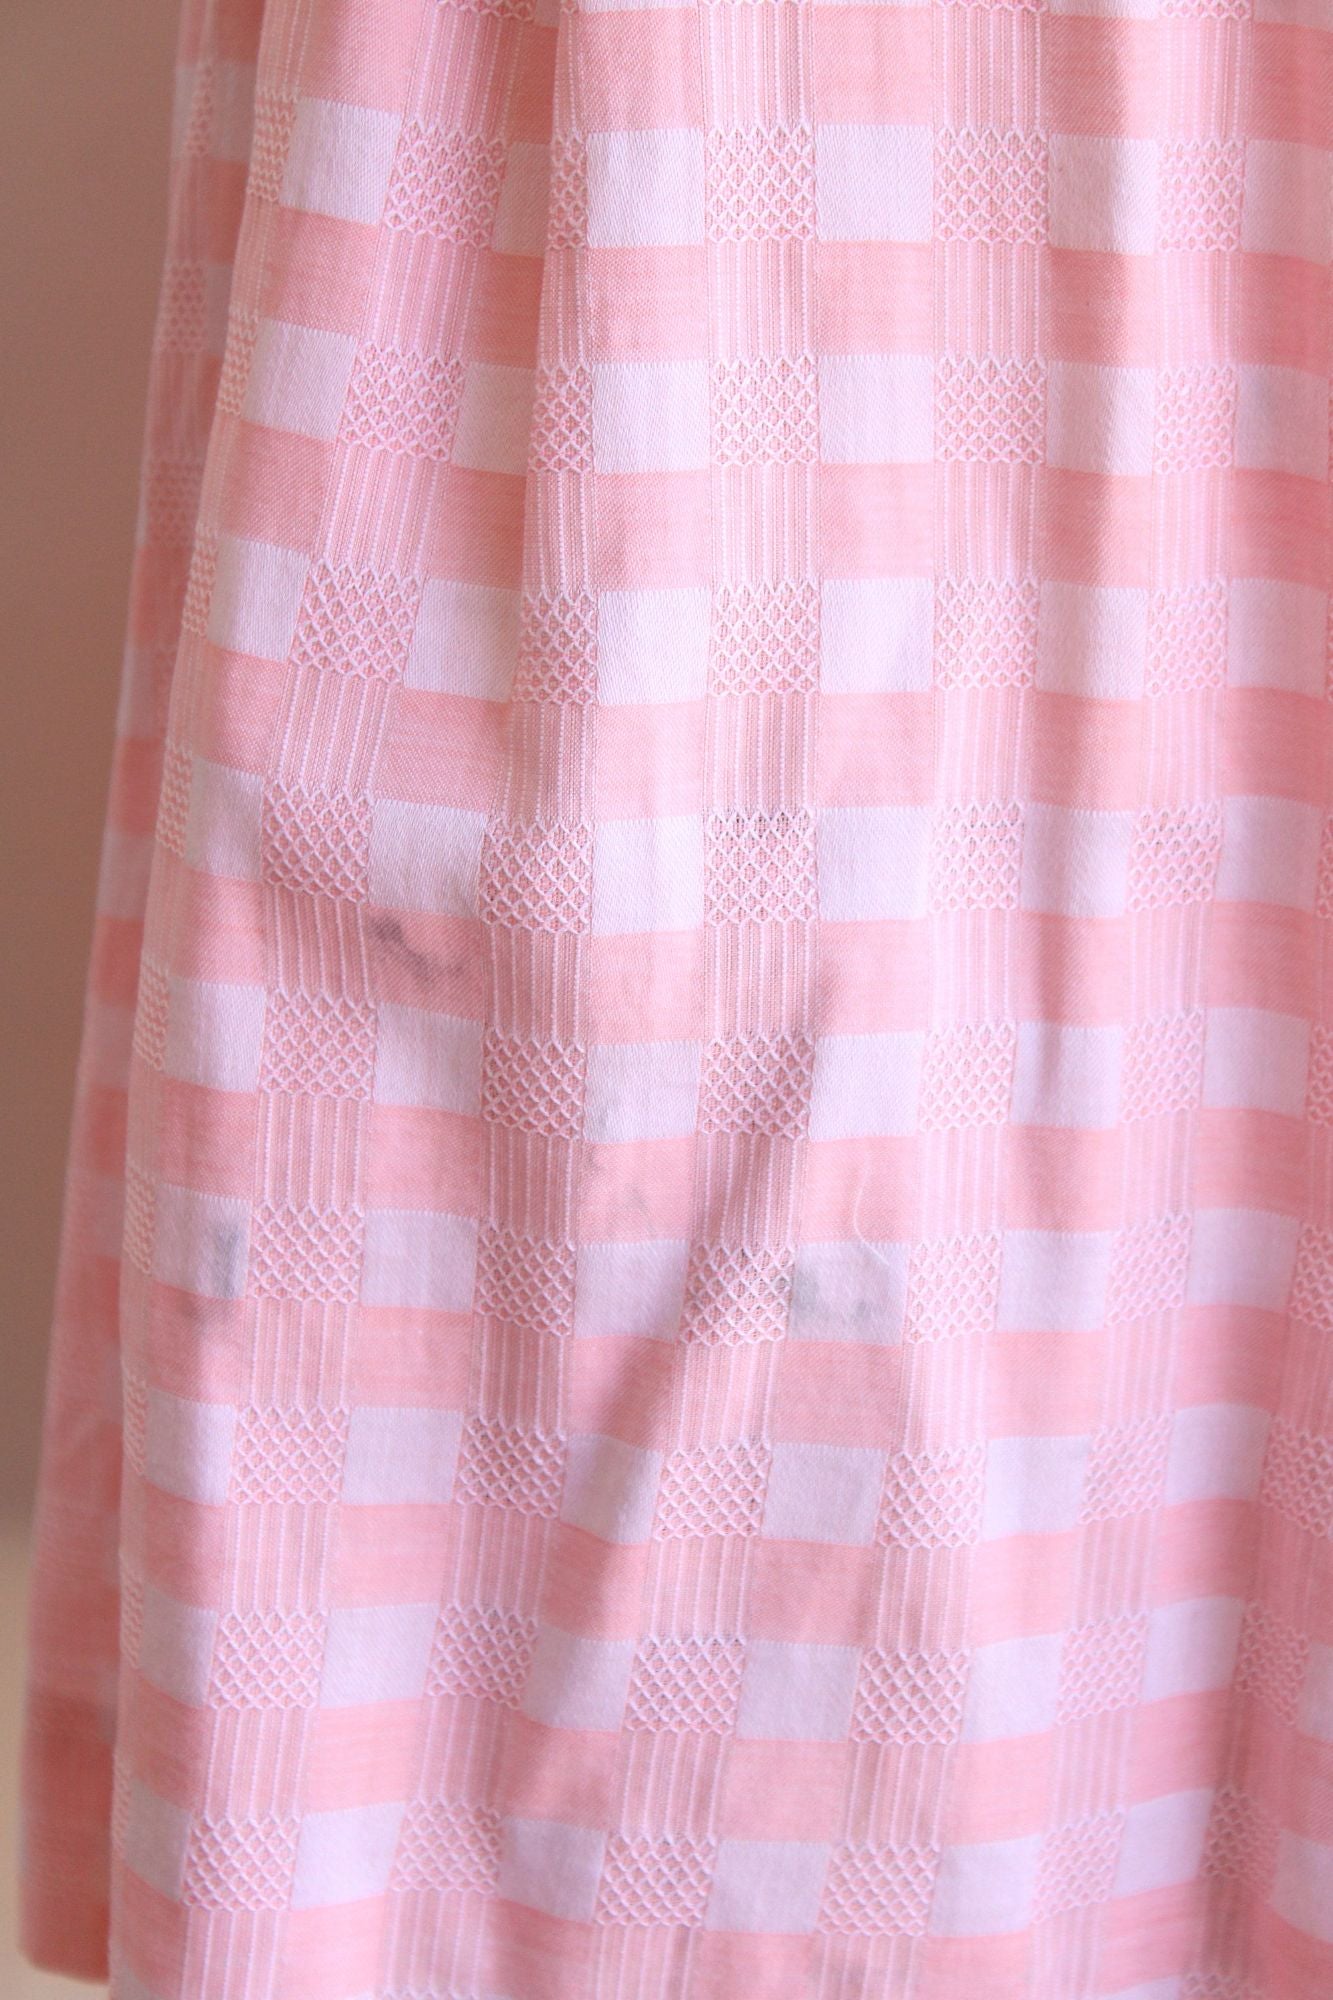 Vintage 1950s Pink Check Print Cotton Shirtwaist Dress, Volup Size